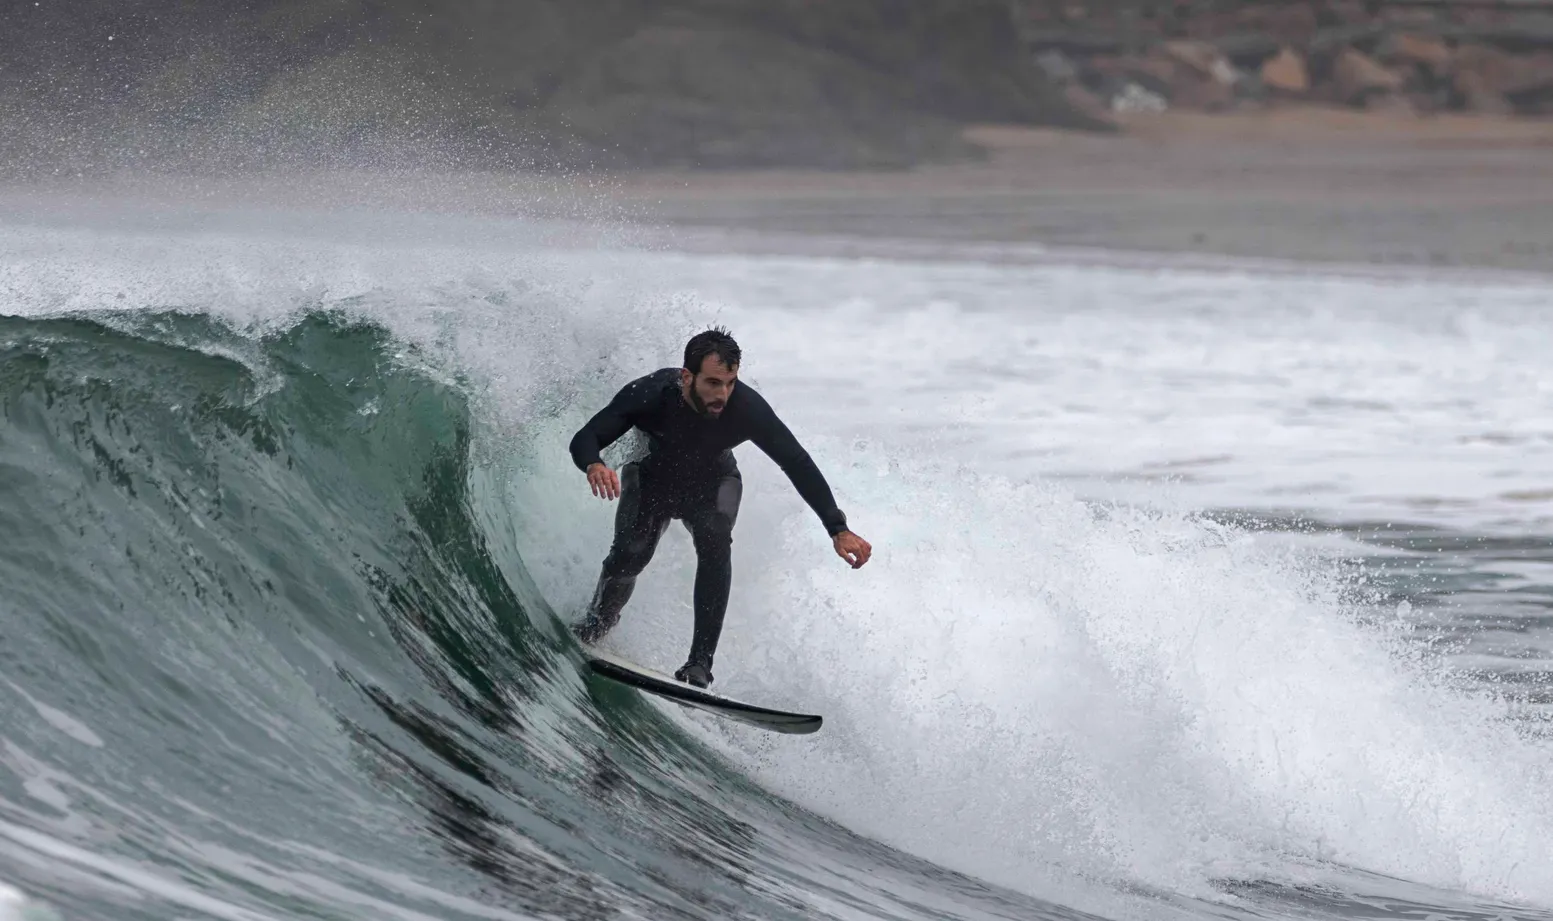 Tomas Madariaga focused surfing a wave